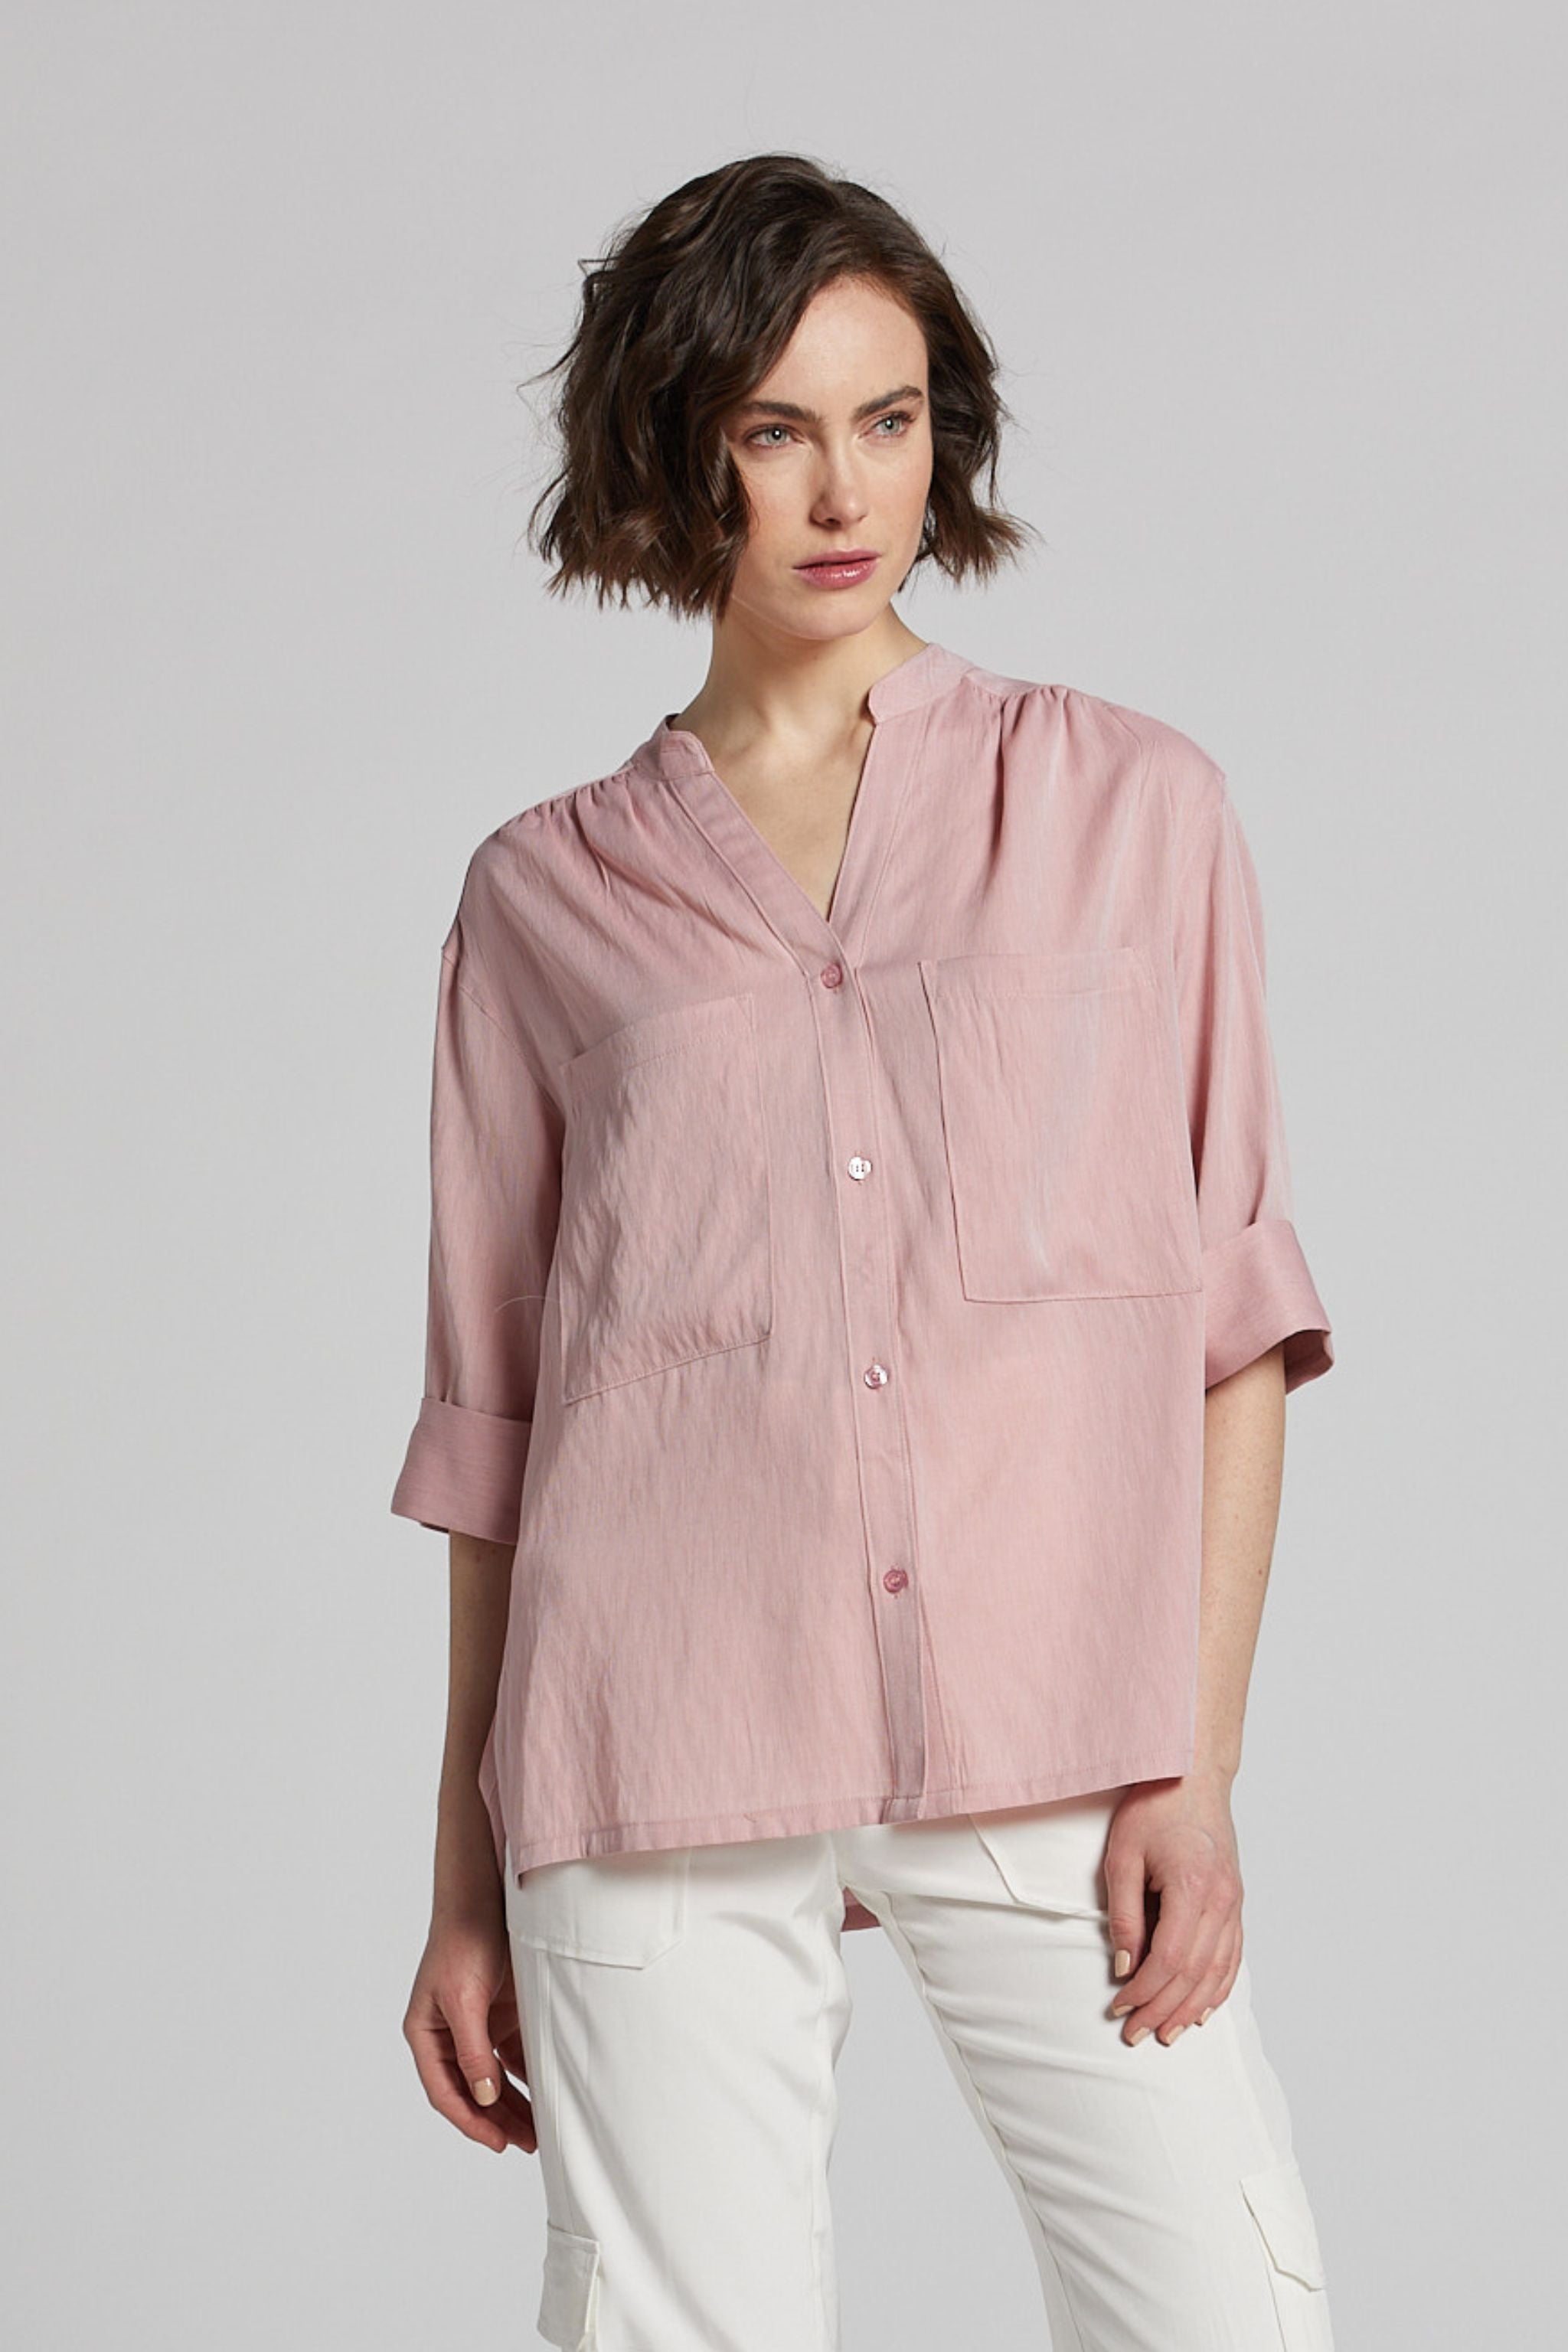 Nala oxford shirting patch pocket blouse